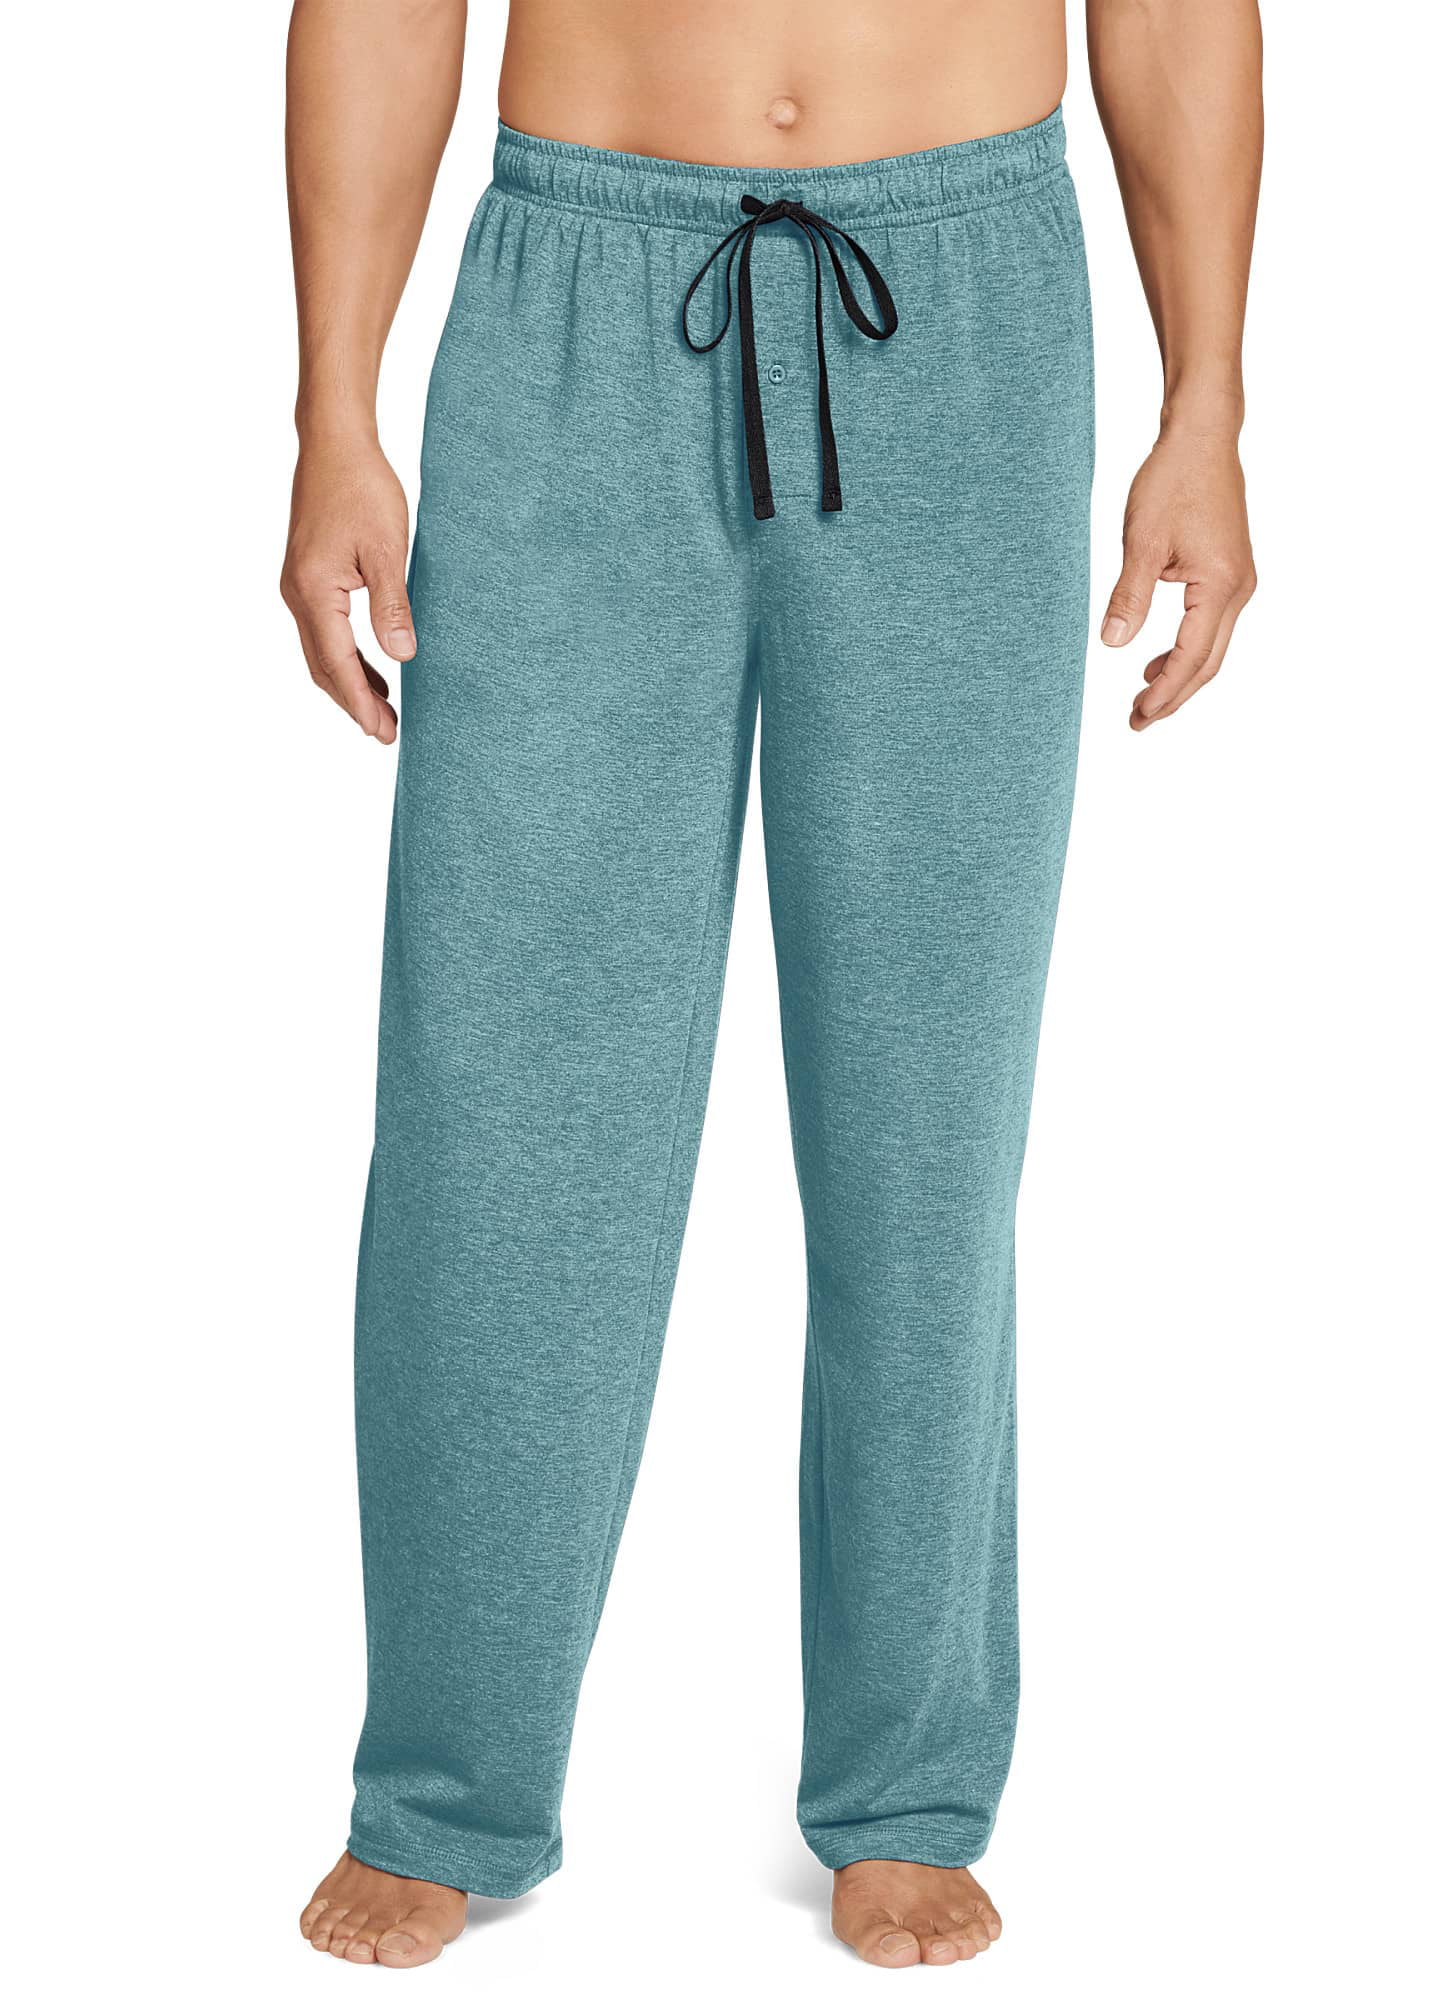 Buy Graphite Assorted Prints Pyjamas for Men by JOCKEY Online  Ajiocom